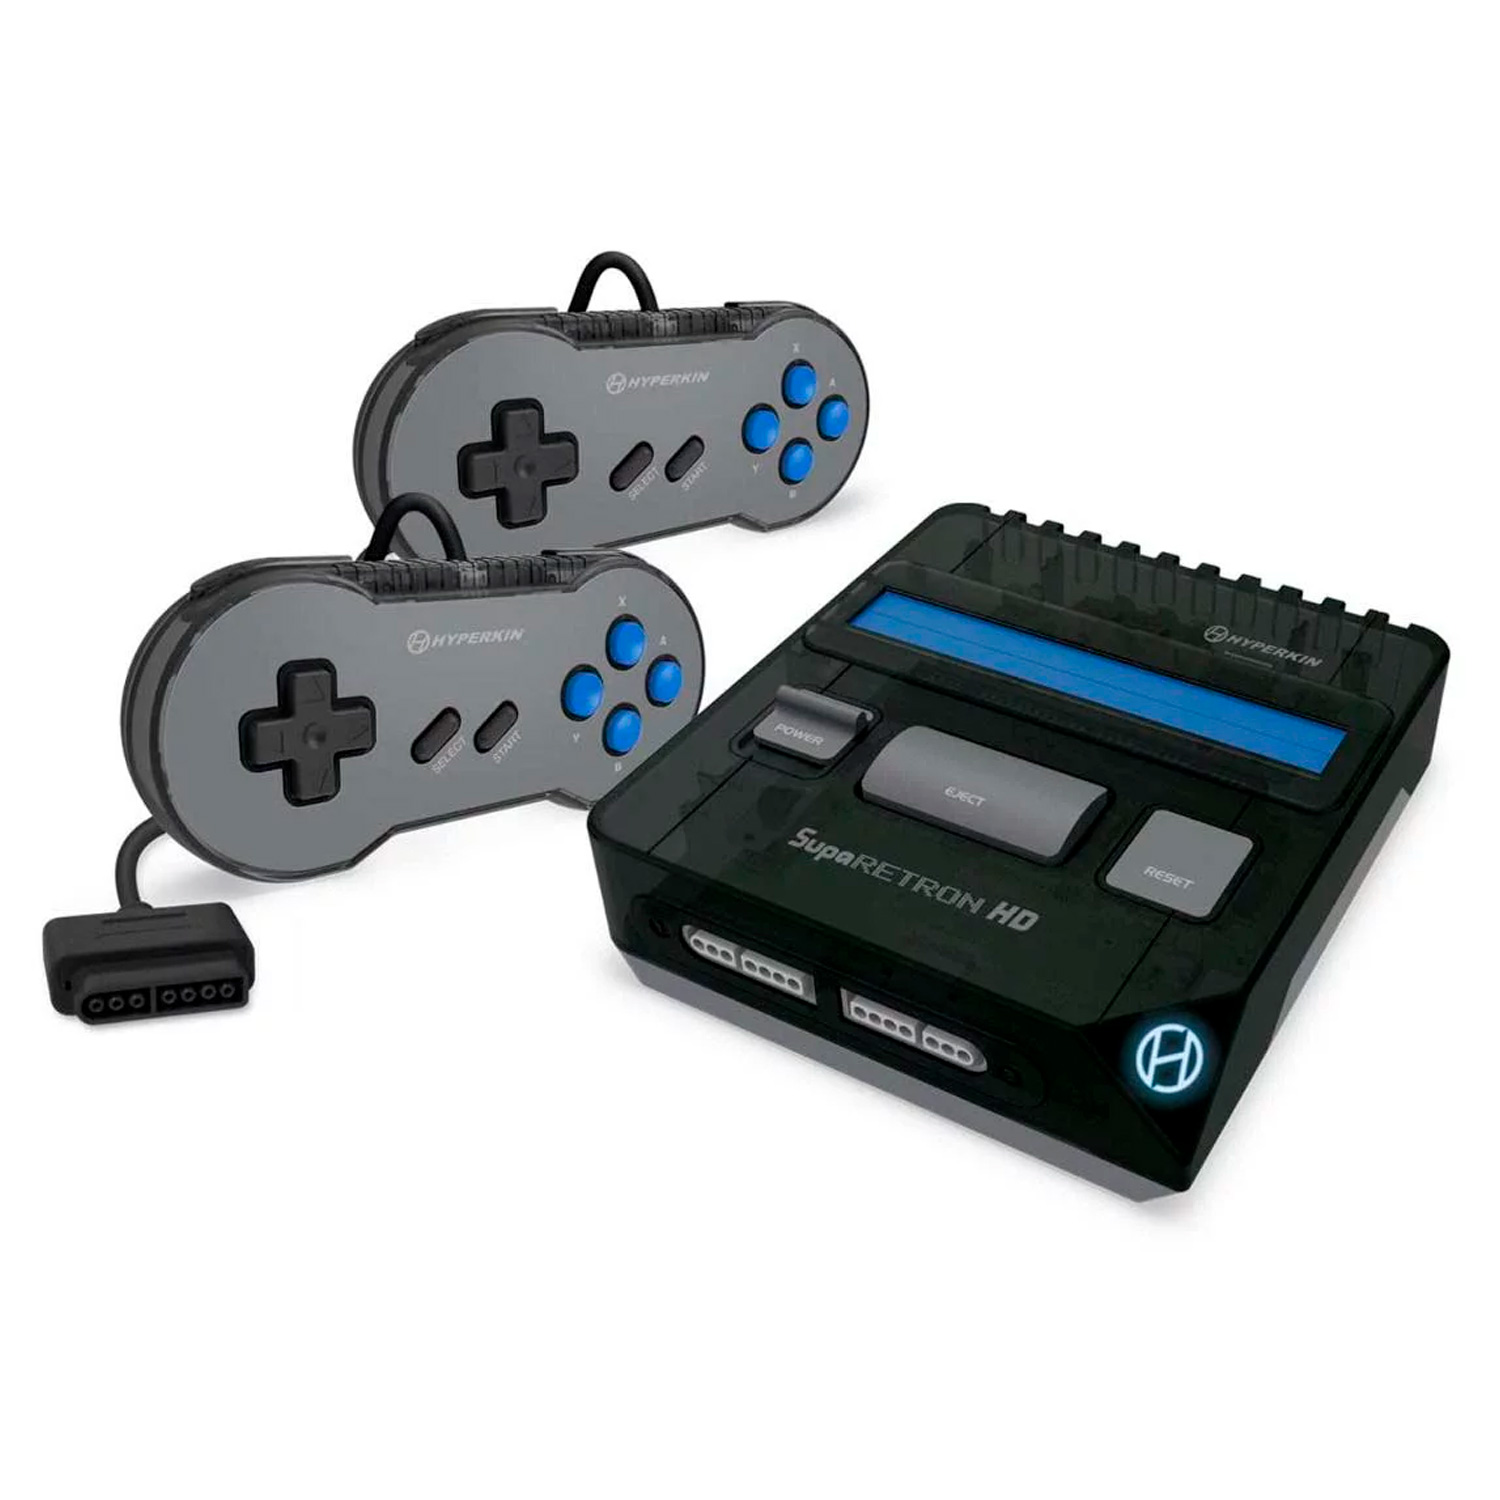 Console Hyperkin SupaRetroN HD Nintendo Super NES